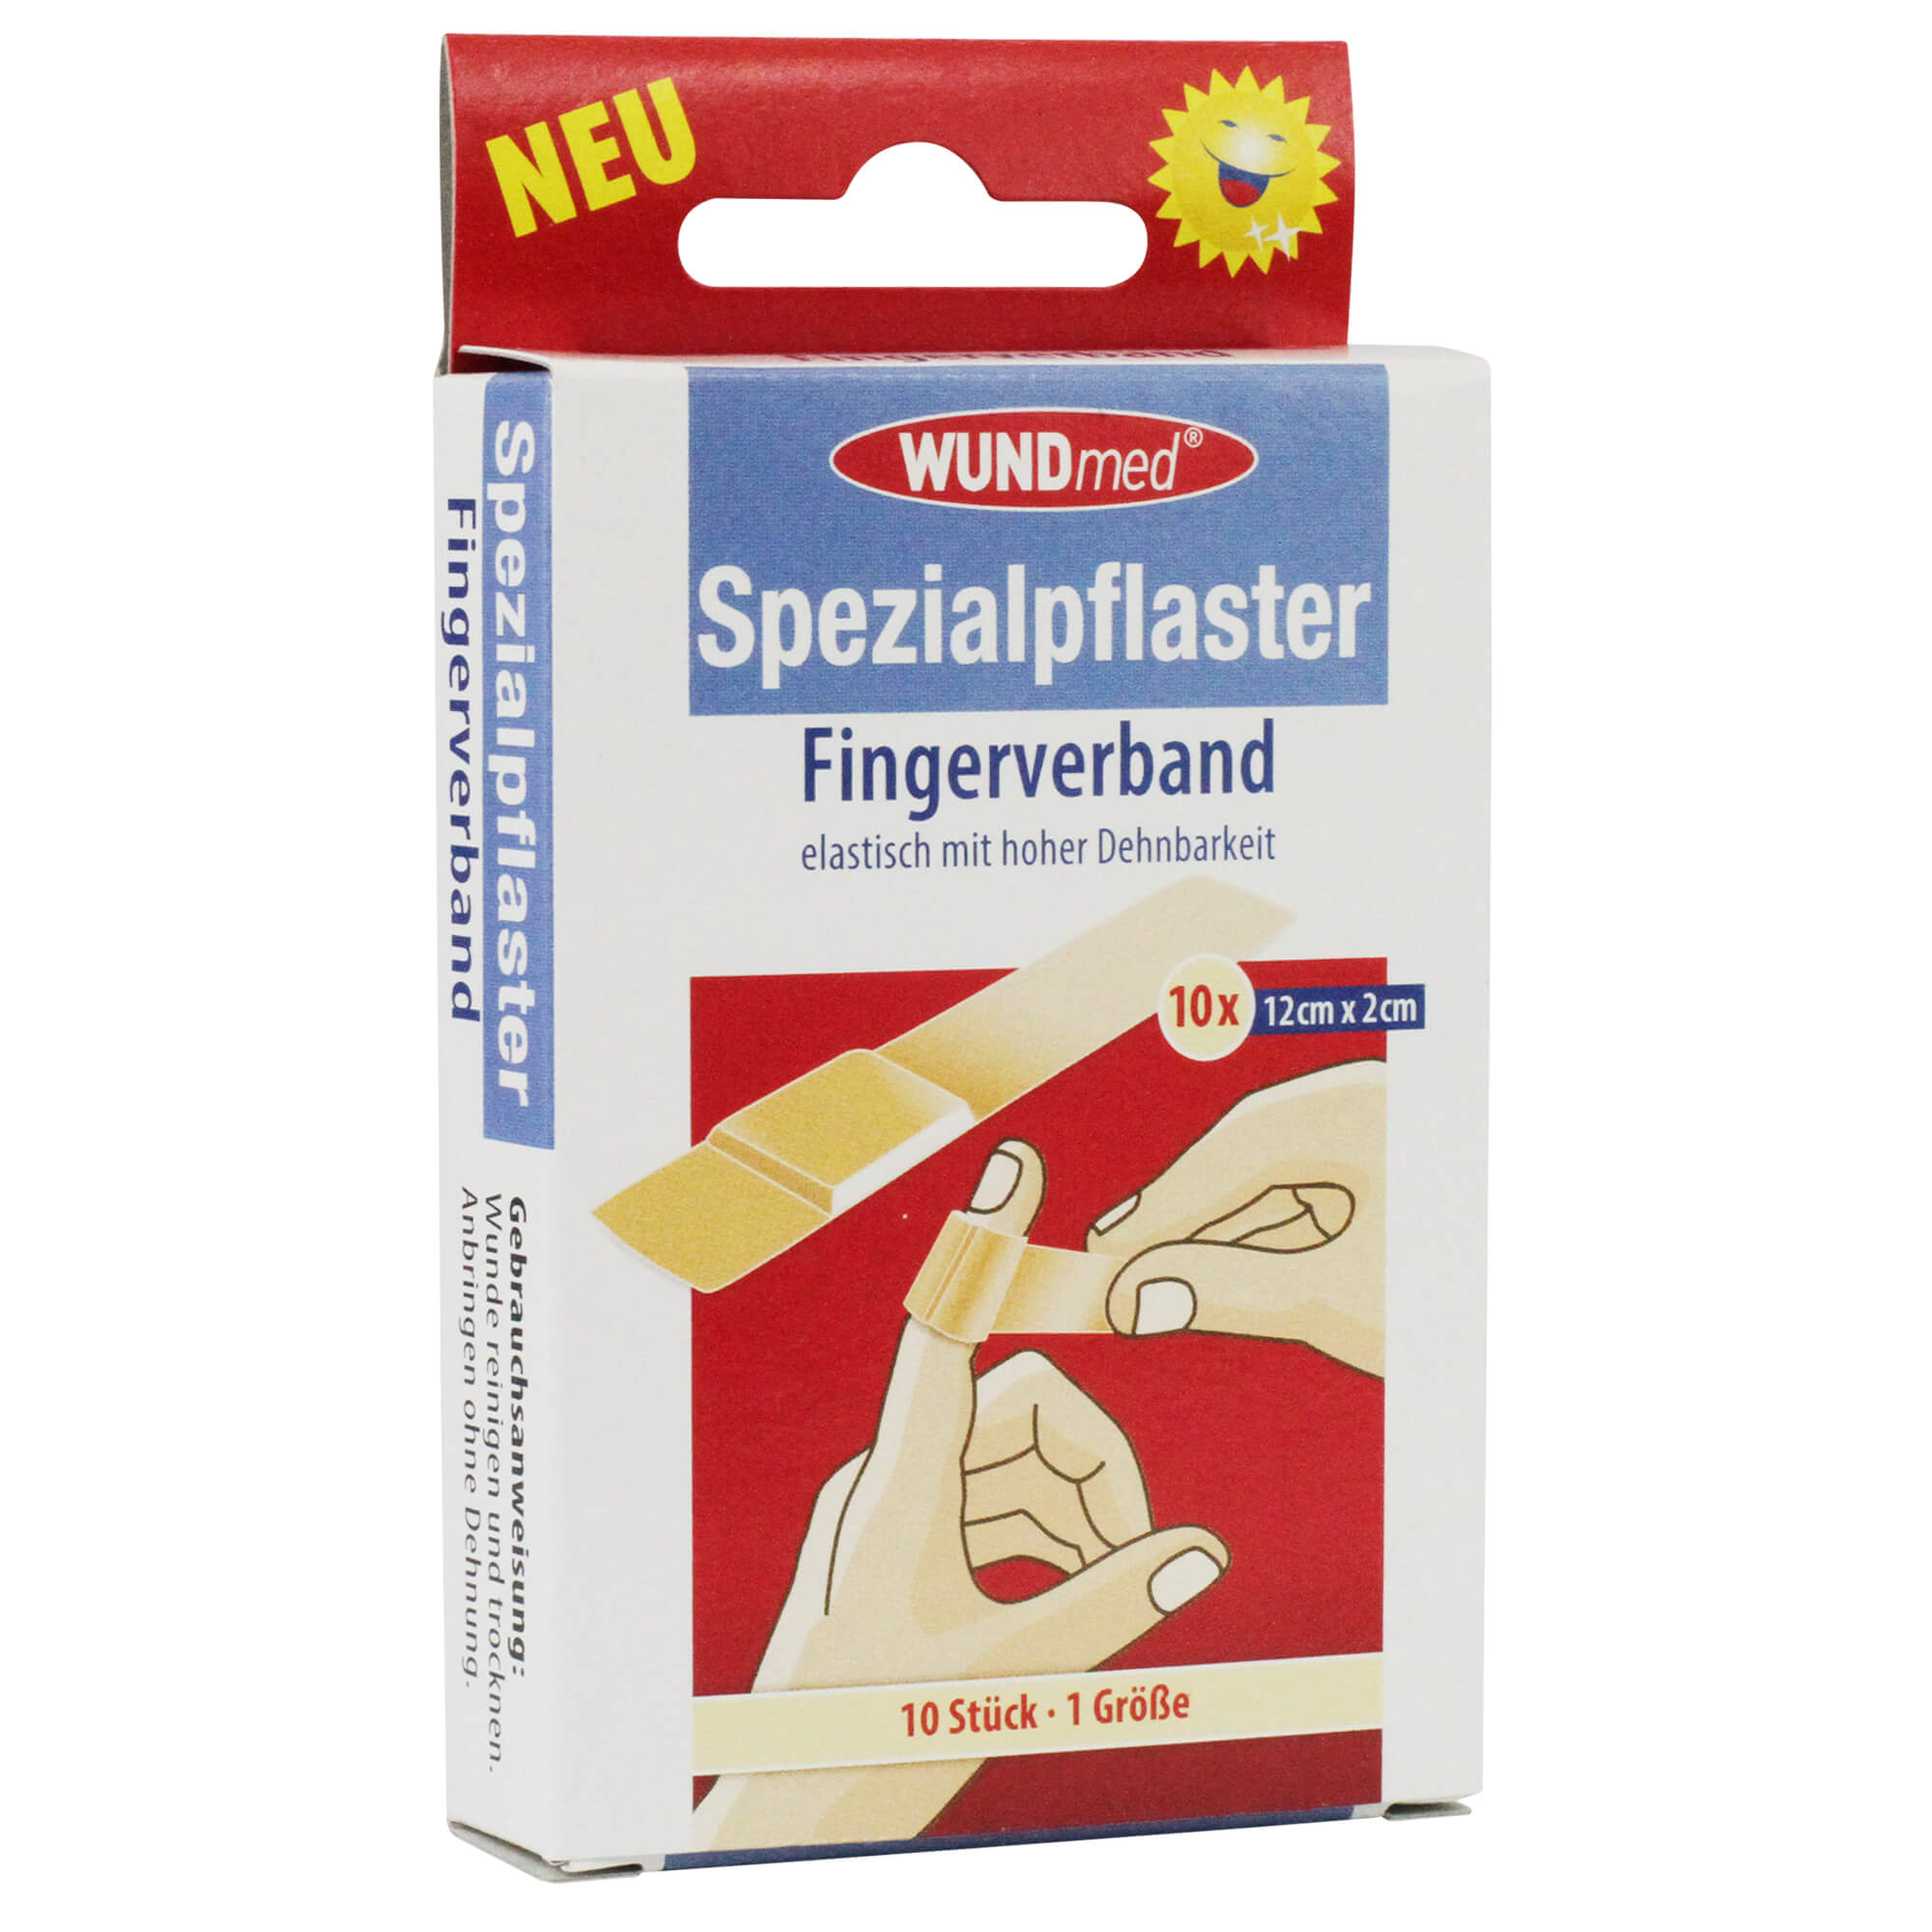 WUNDmed® Spezialpflaster "Fingerverband" 10 Stück/Packung